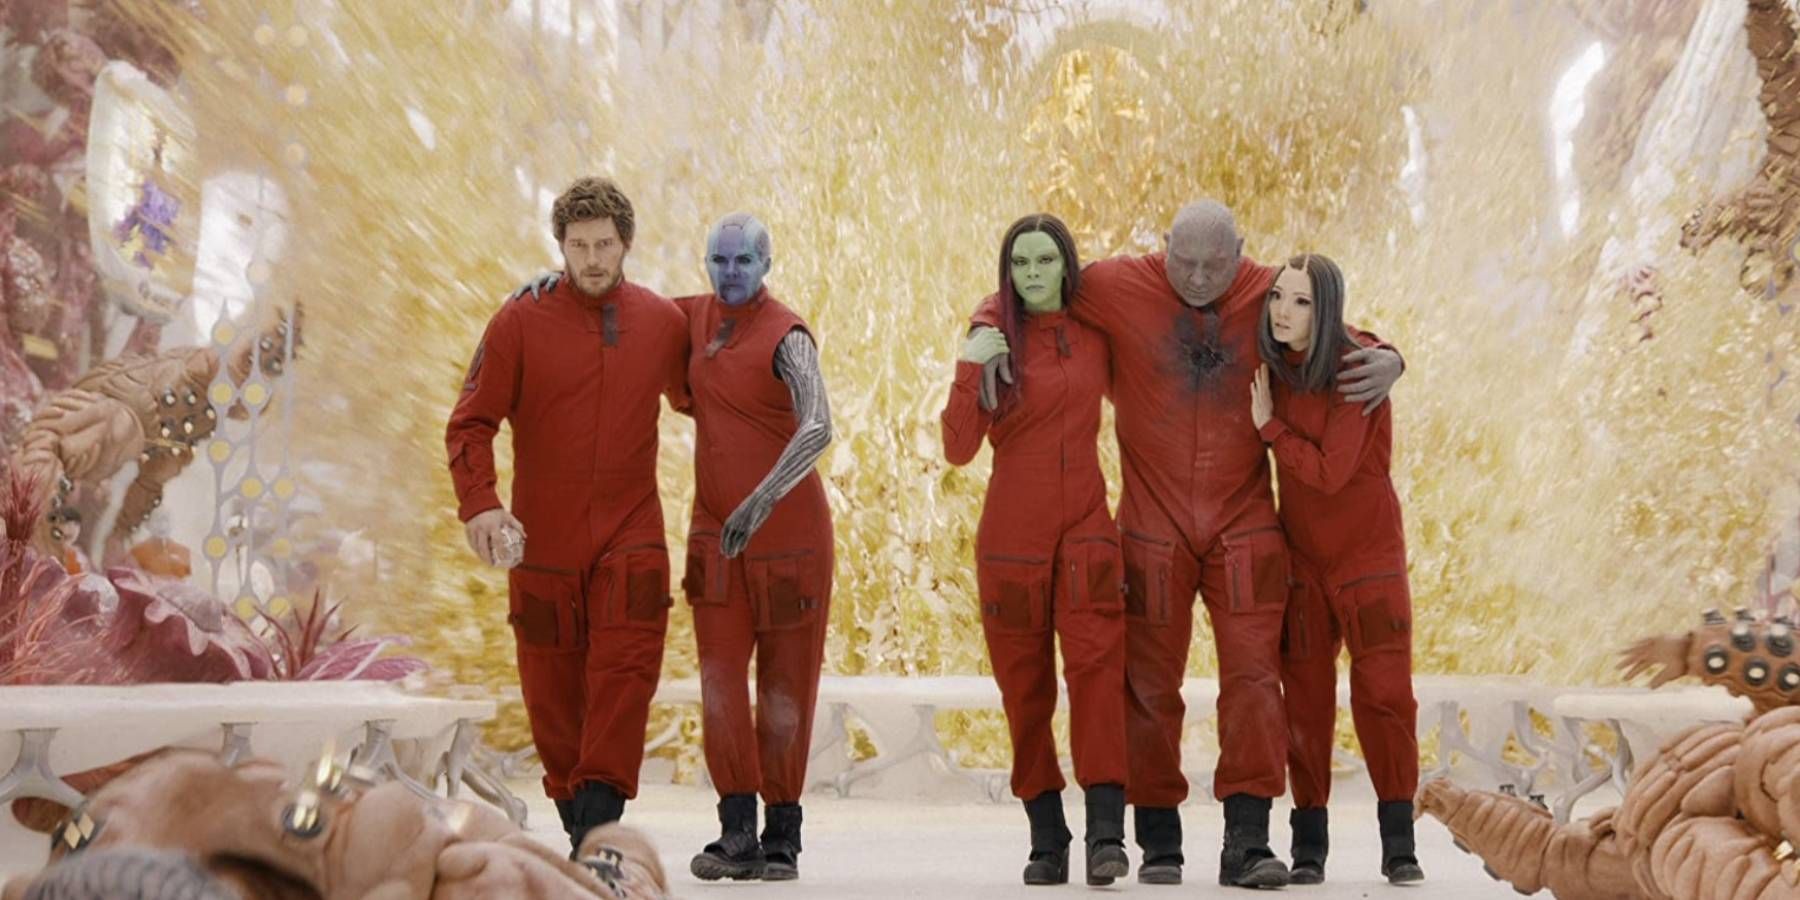  Guardians of the Galaxy 3 Star-Lord, Nebula, Gamora, Drax and Mantis wearing orange jumpsuits